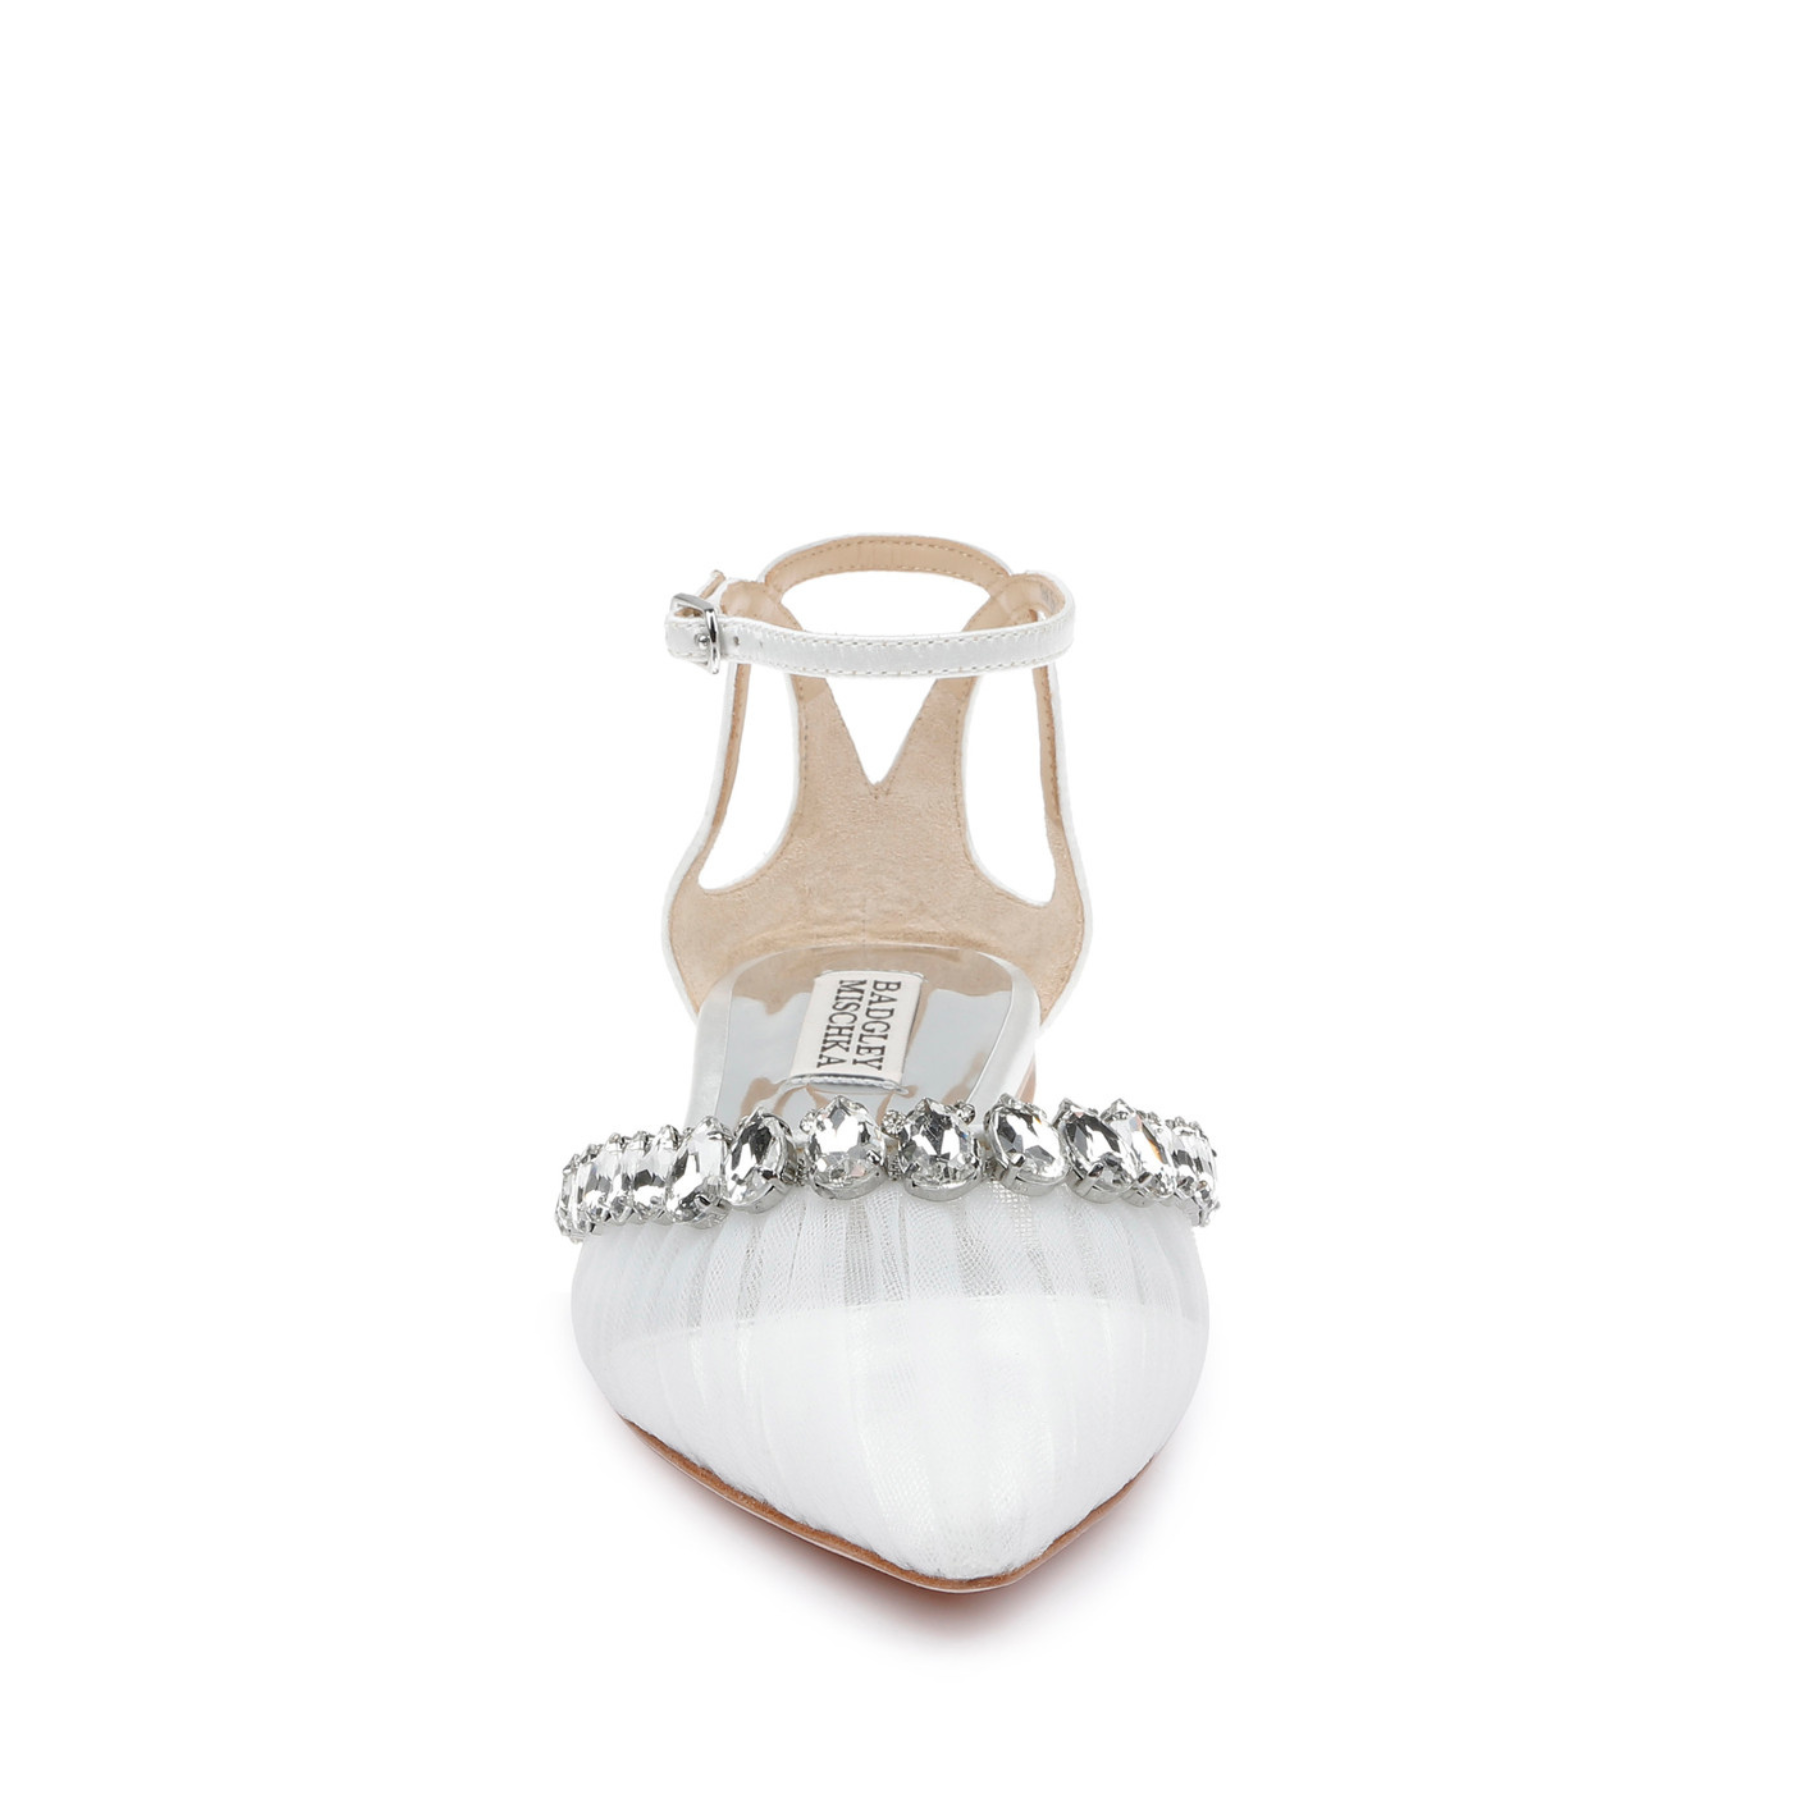 Evelynn - Crystal Embellished Tulle & Satin Flats - Soft White